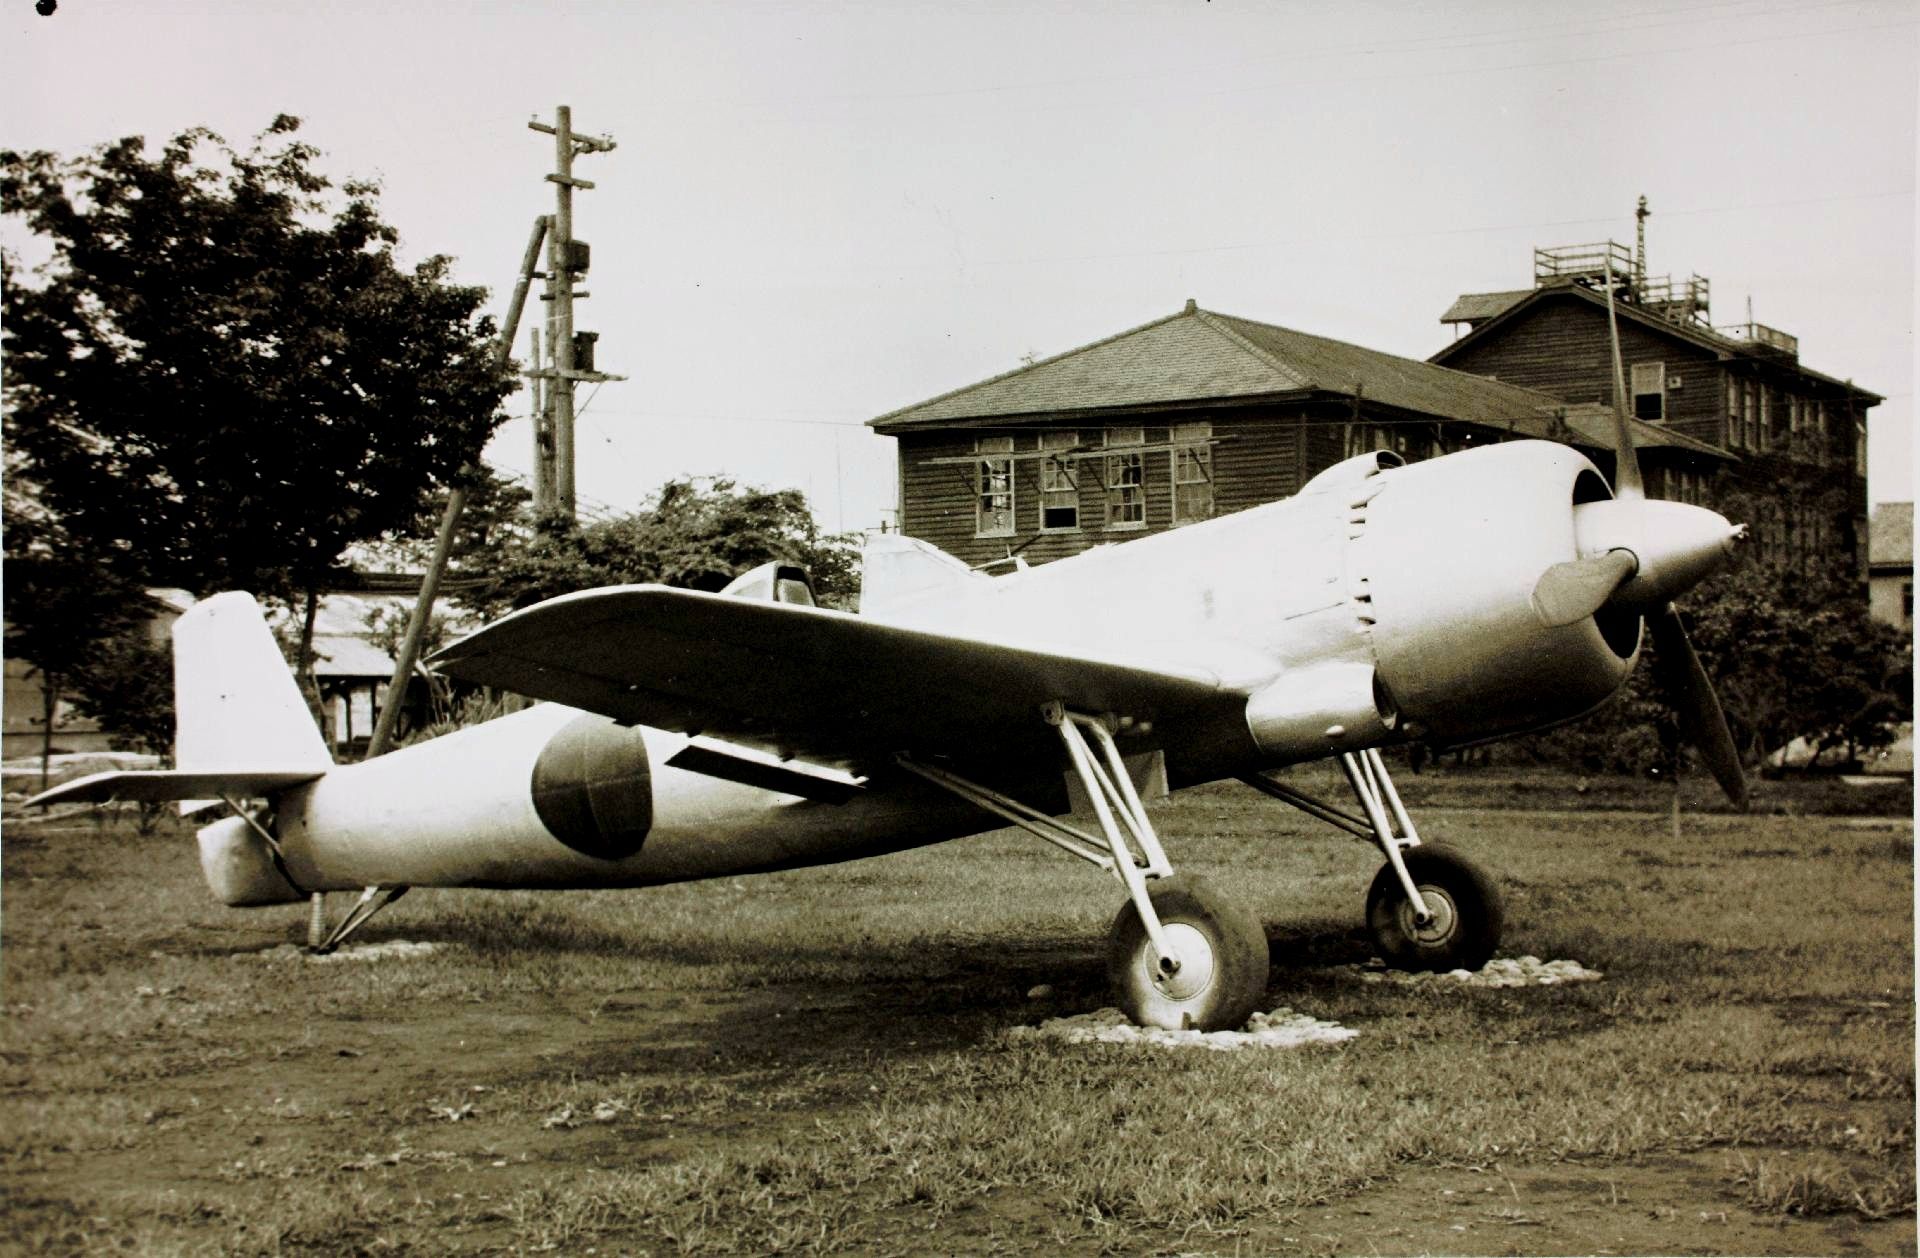 Nakajima_Ki-115_Tsurugi_Low-cost_suicide